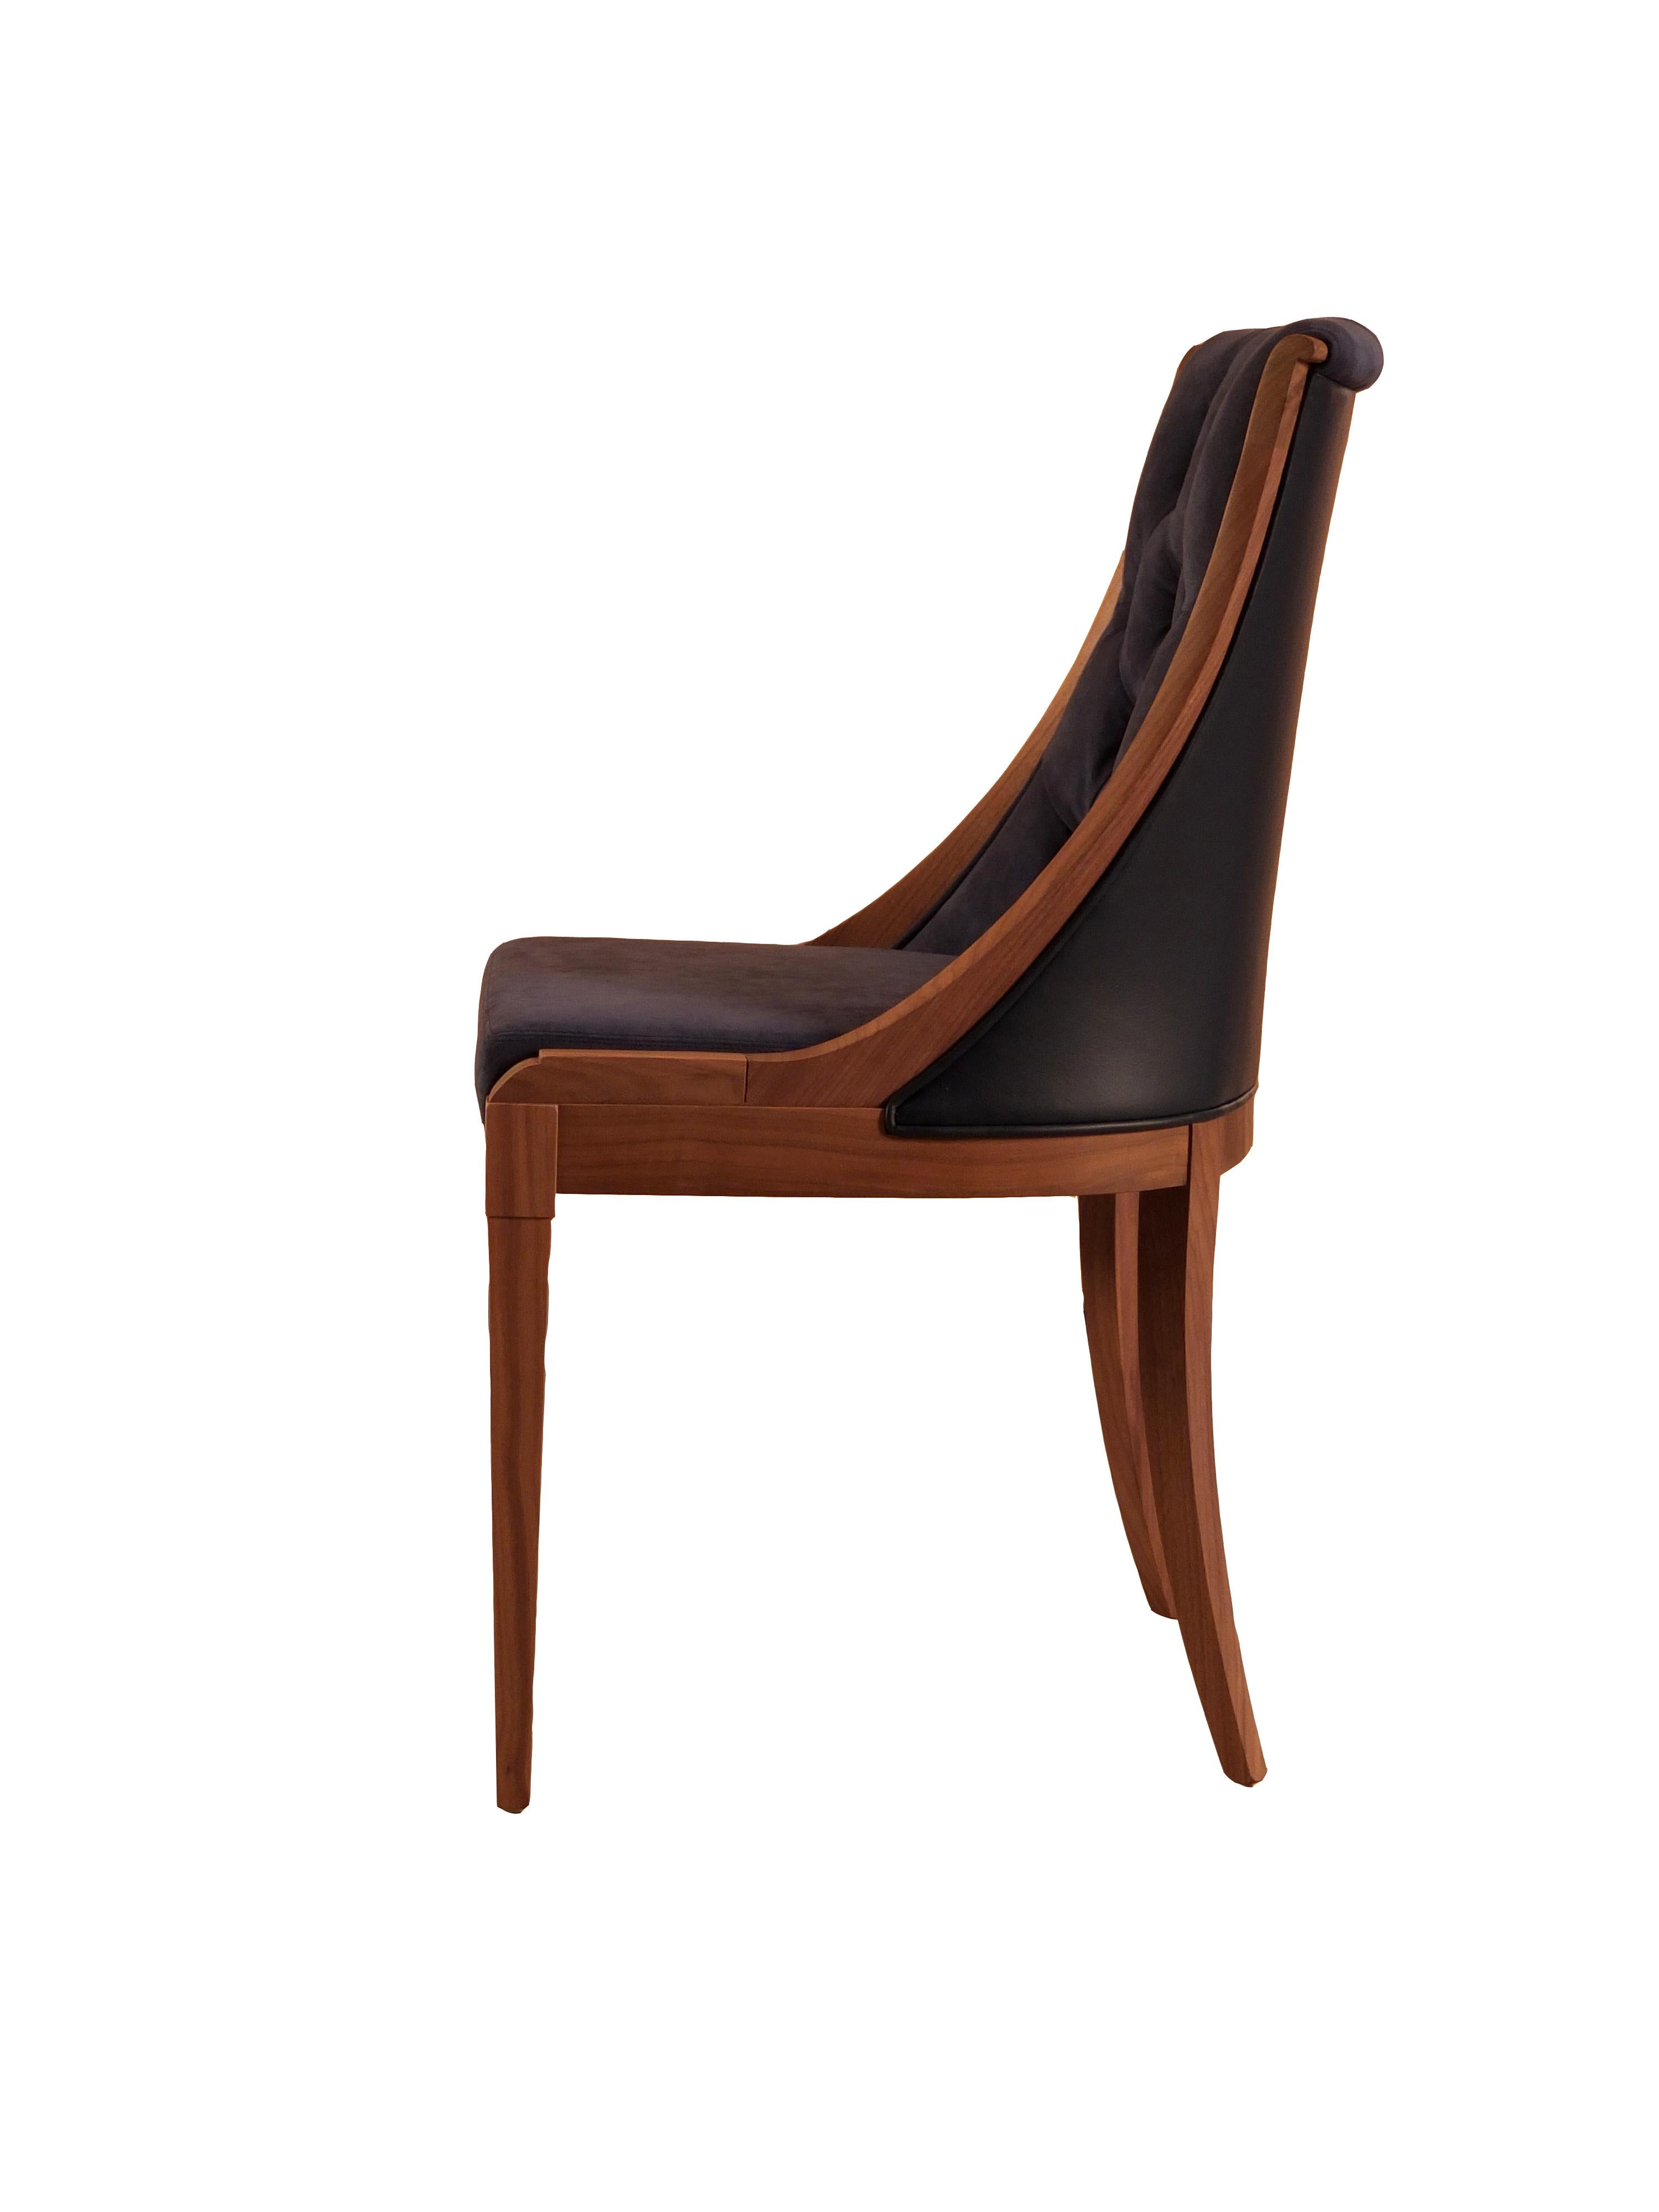 Biedermeier Musa, Capitonè Upholstered Chair Made of Cherrywood